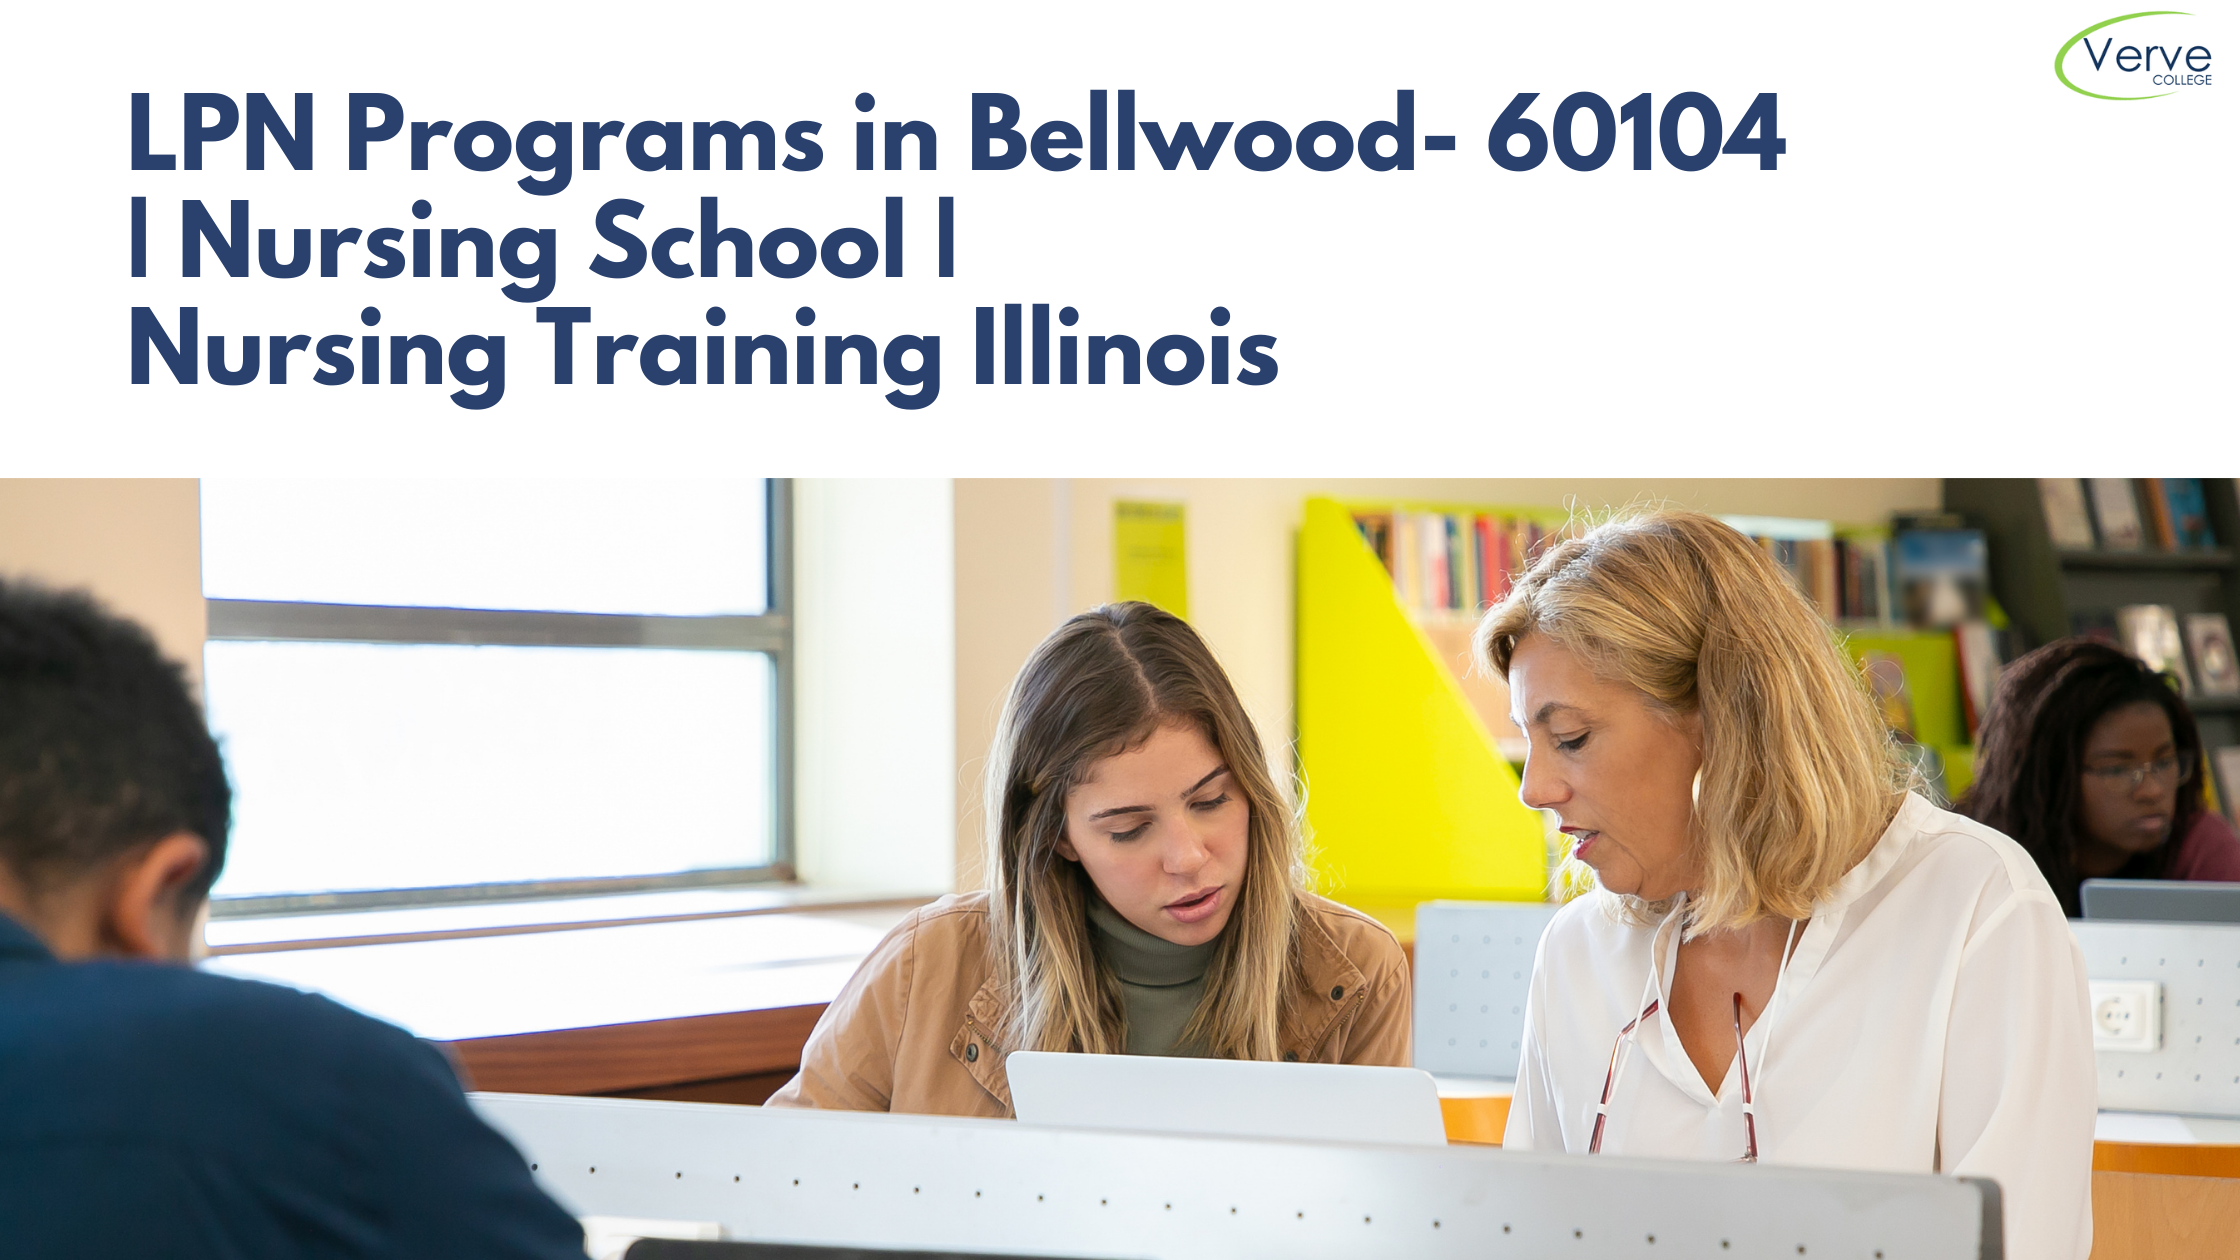 LPN Programs in Bellwood, IL – 60104 | Nursing School | Nursing Training Illinois